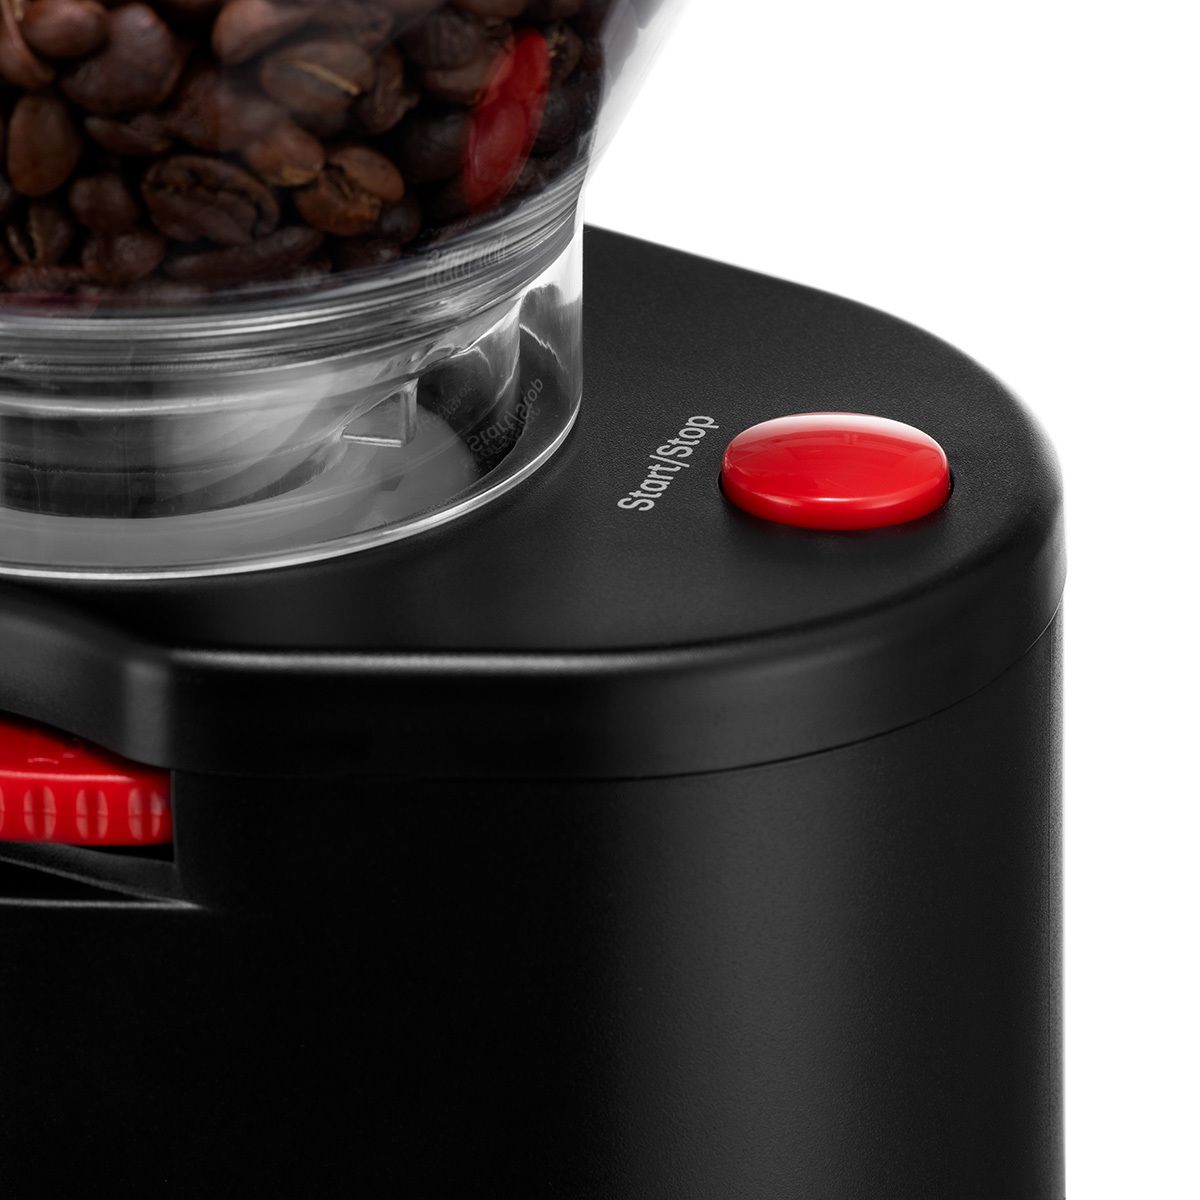 Bodum Bistro Electric Coffee Grinder Conical Grinder 160 W, Black